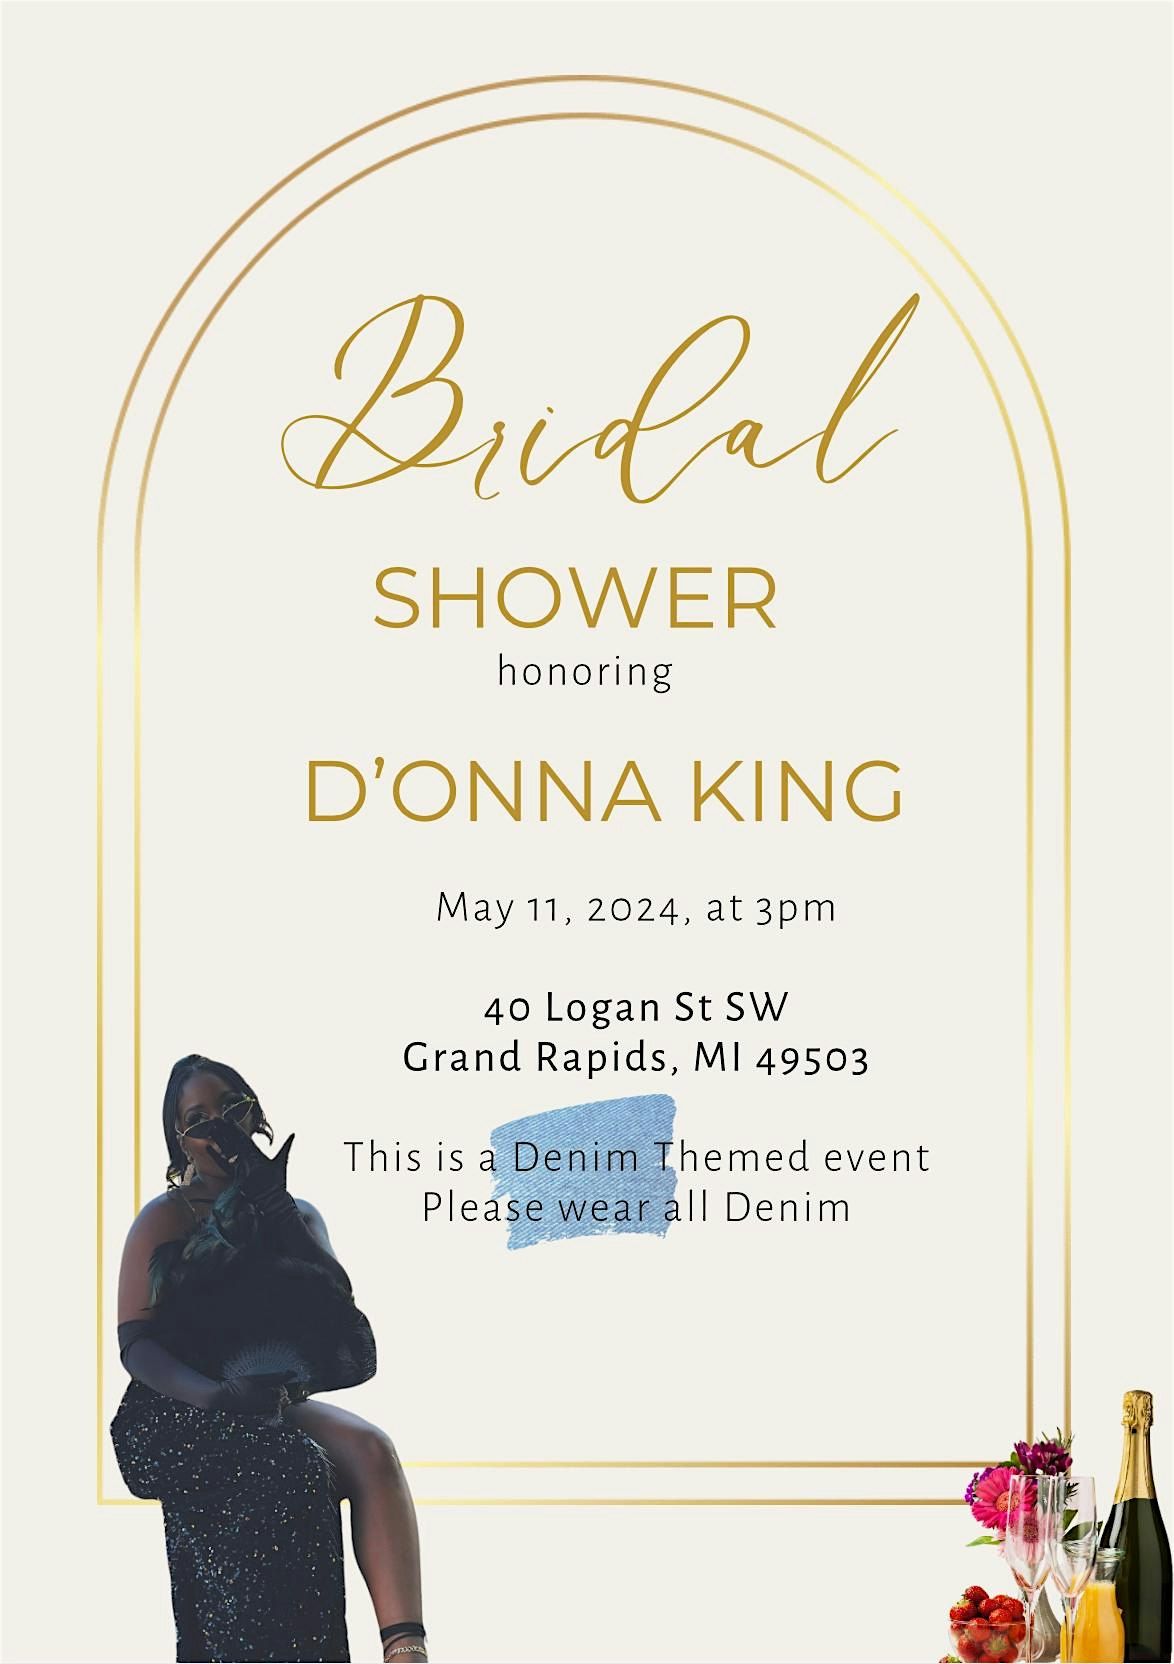 D'onna's Bridal Shower